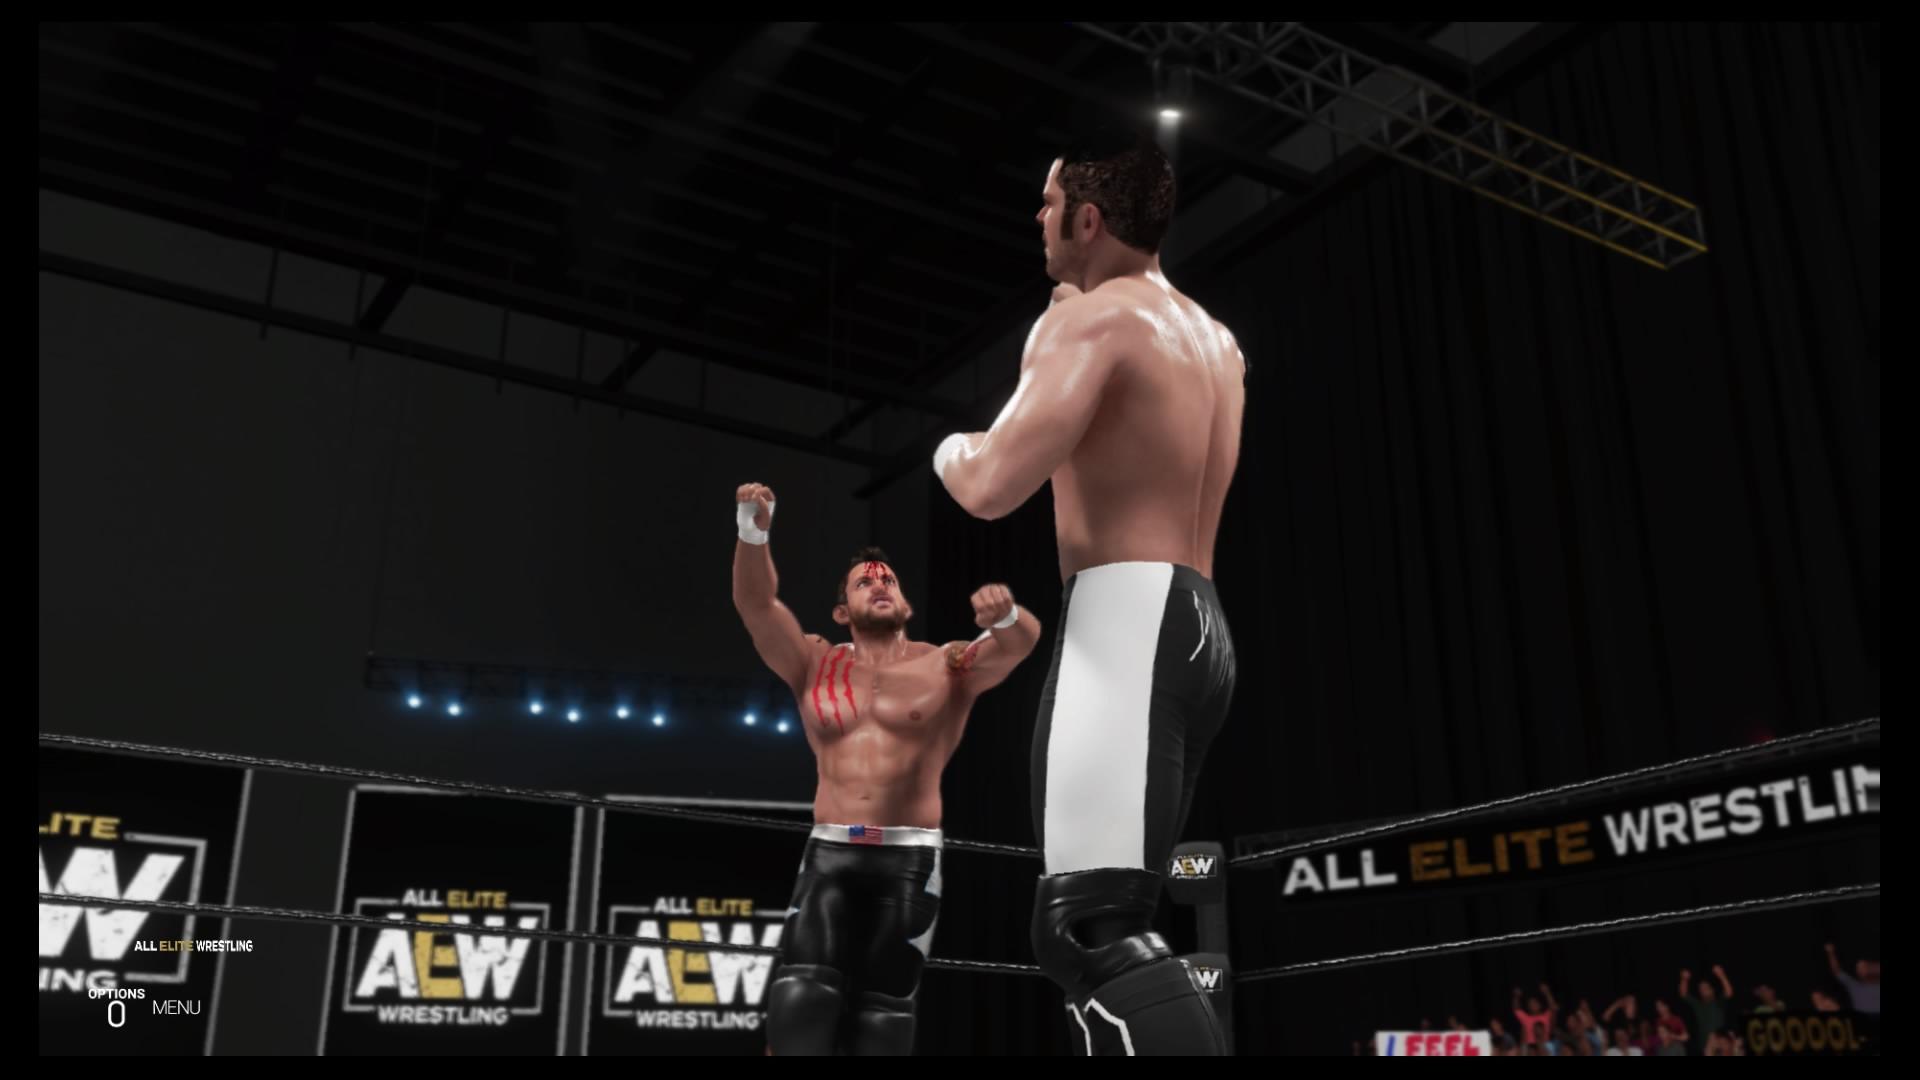 All Elite Wrestling (AEW) 2K19 Universe Mode